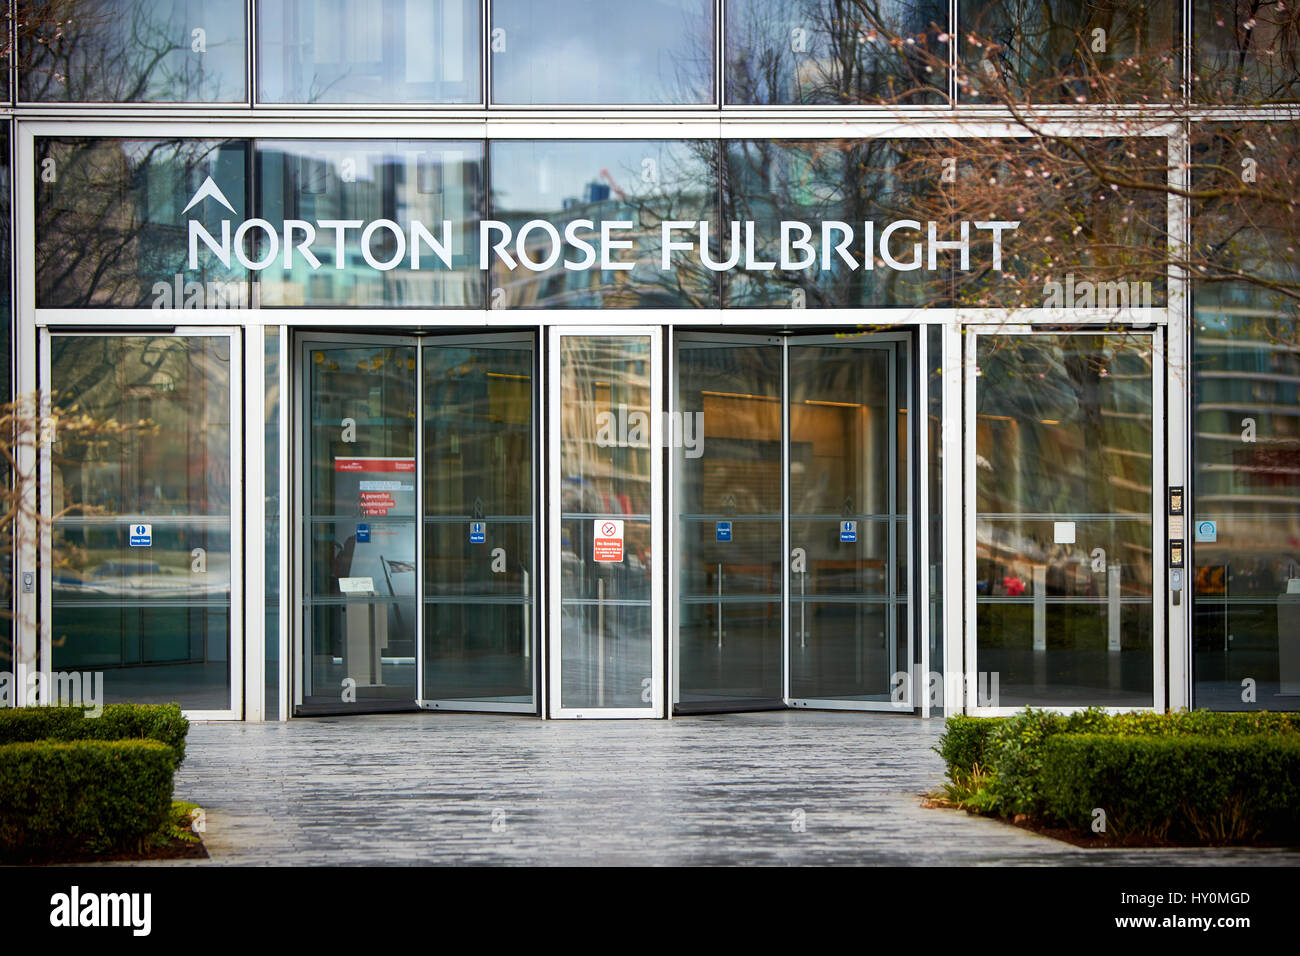 Gesamtansicht der Norton Rose Fulbright Büros in London Stockfotografie -  Alamy